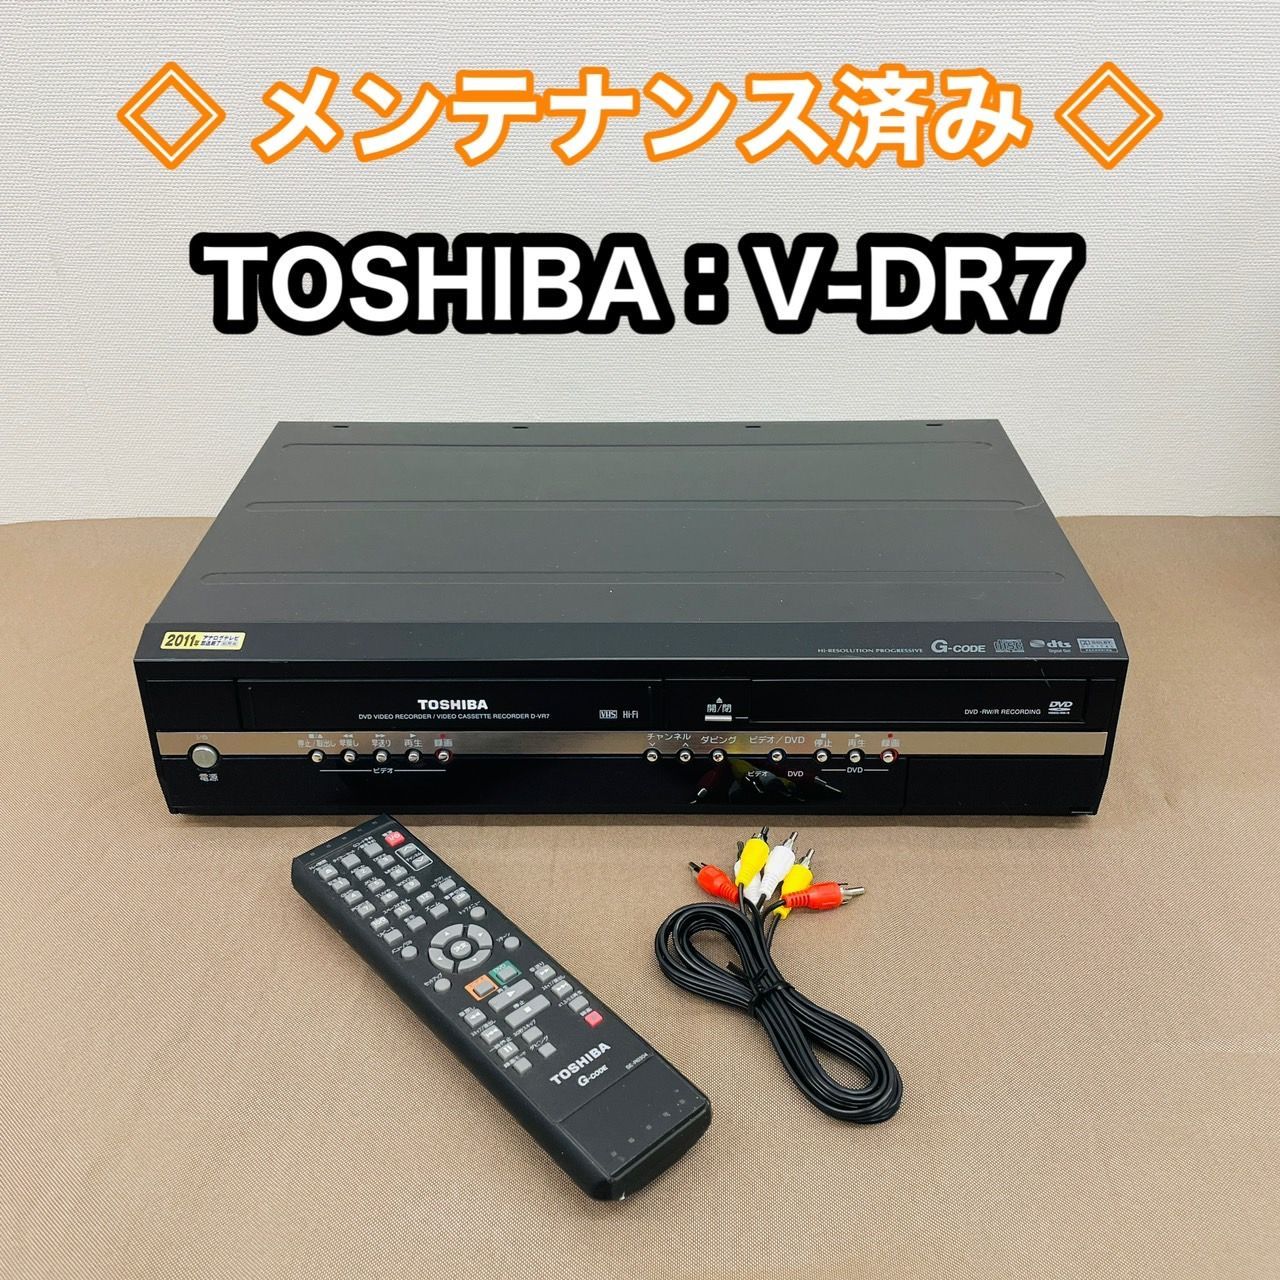 TOSHIBA VTR一体型DVDレコーダー D-VR7 - DVDレコーダー